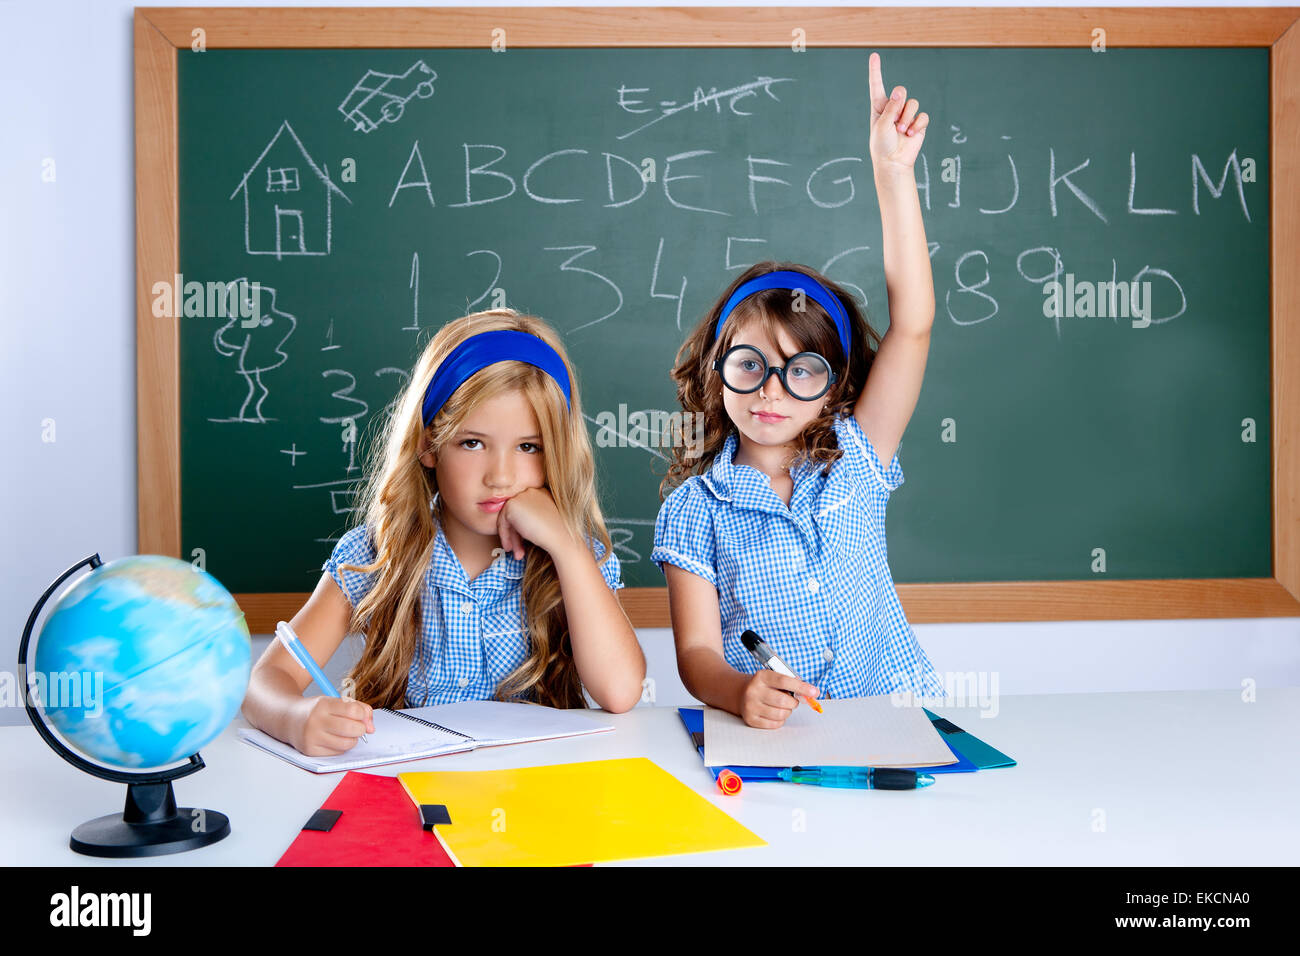 clever nerd student girl in classroom raising hand Stock Photo: 80800104 - Alamy1300 x 956